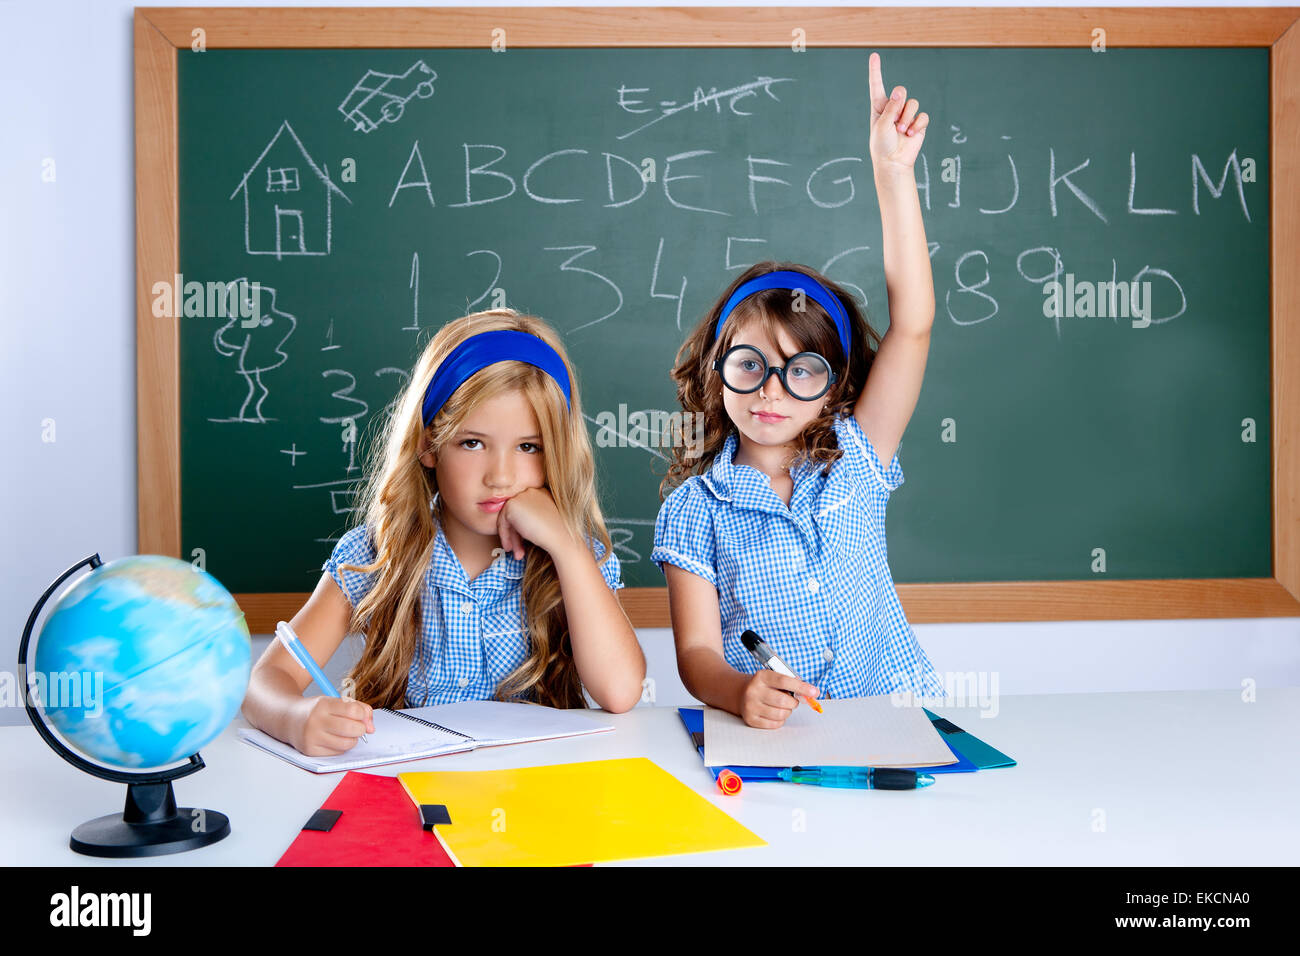 clever nerd student girl in classroom raising hand Stock Photo: 80800104 - Alamy1300 x 956